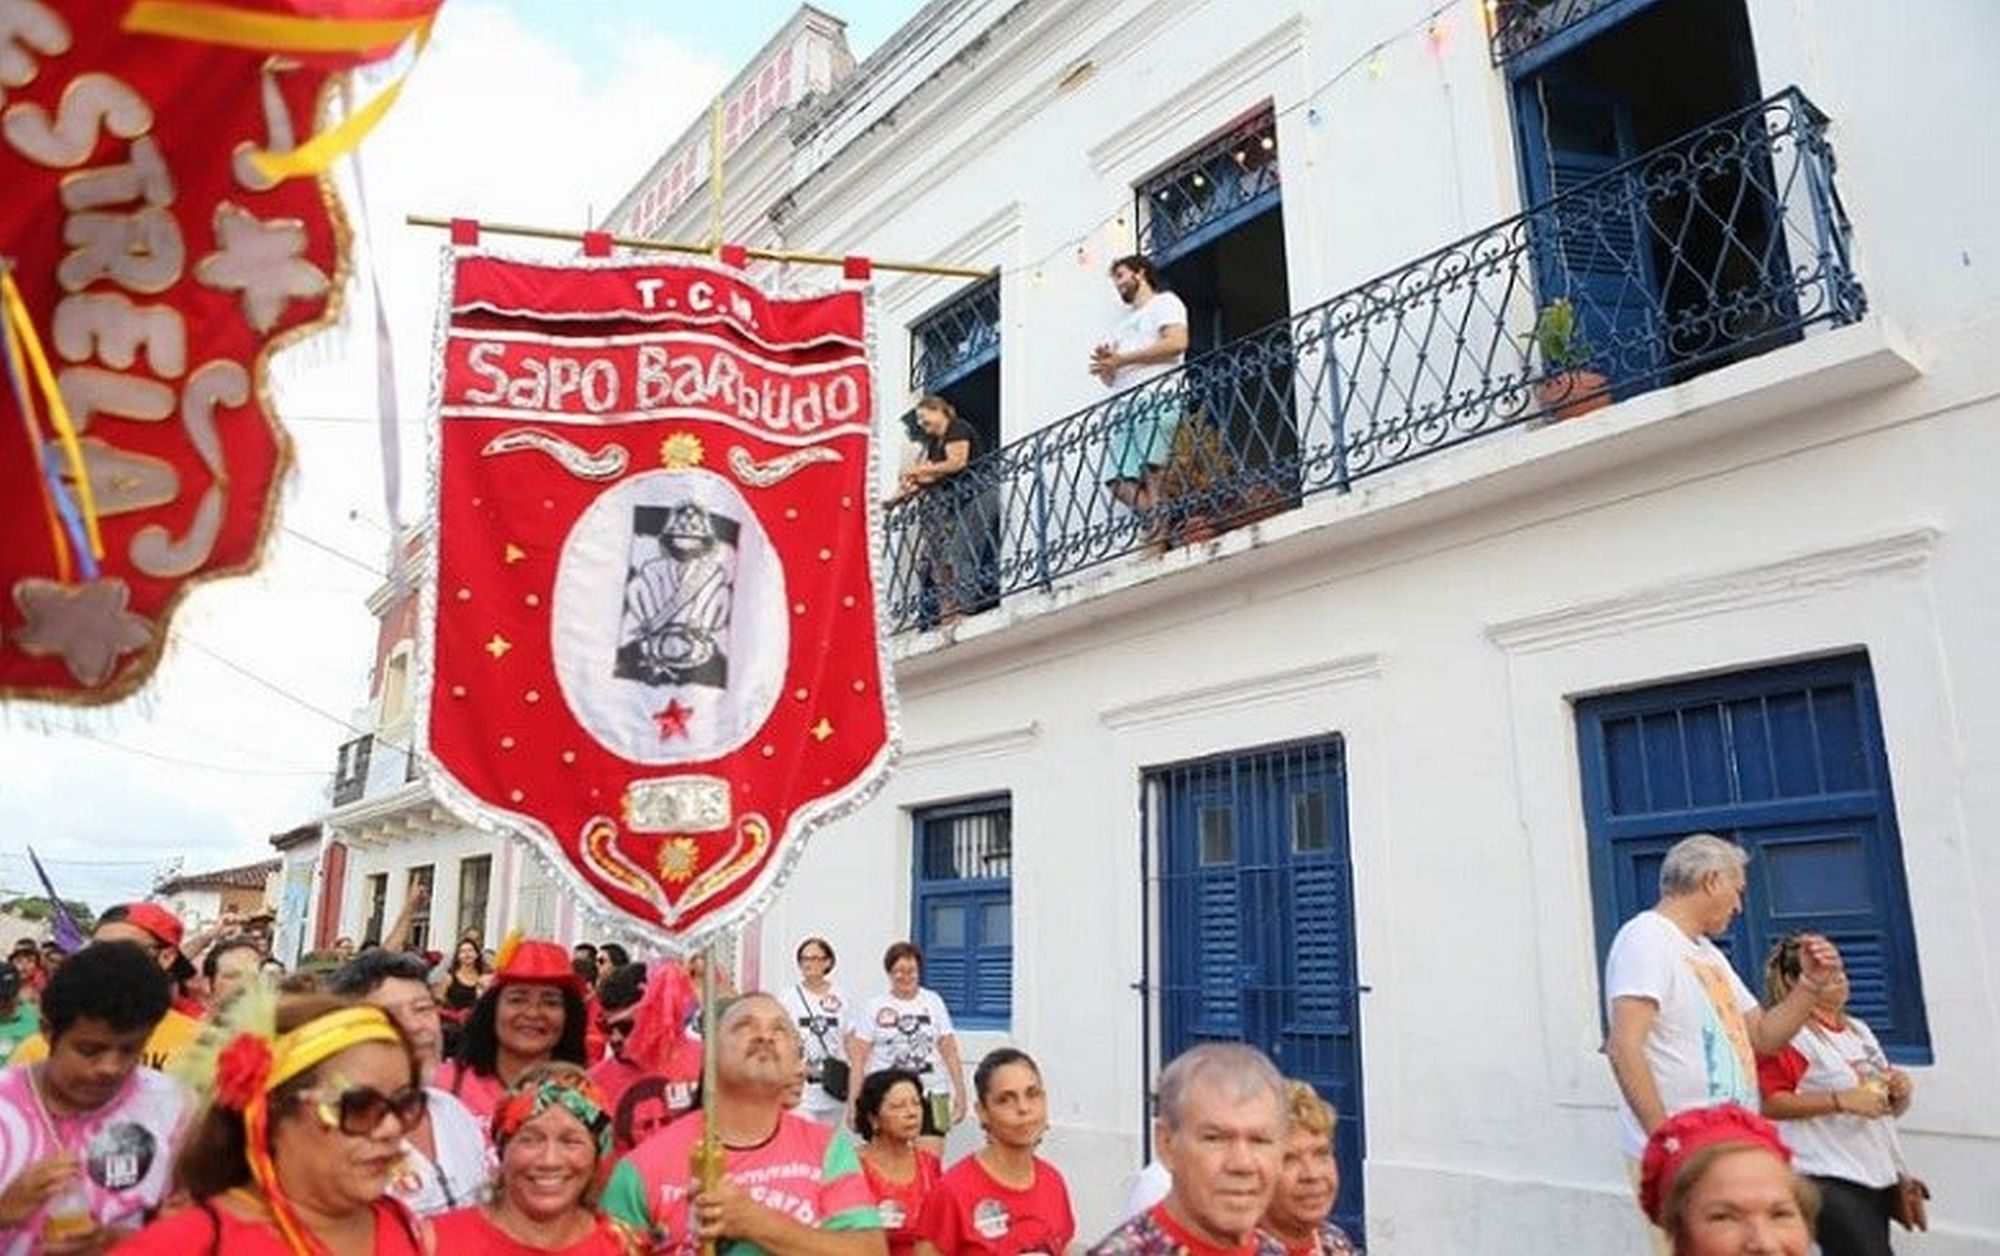 The sapo barbudo group was created by Pernambuco's PT